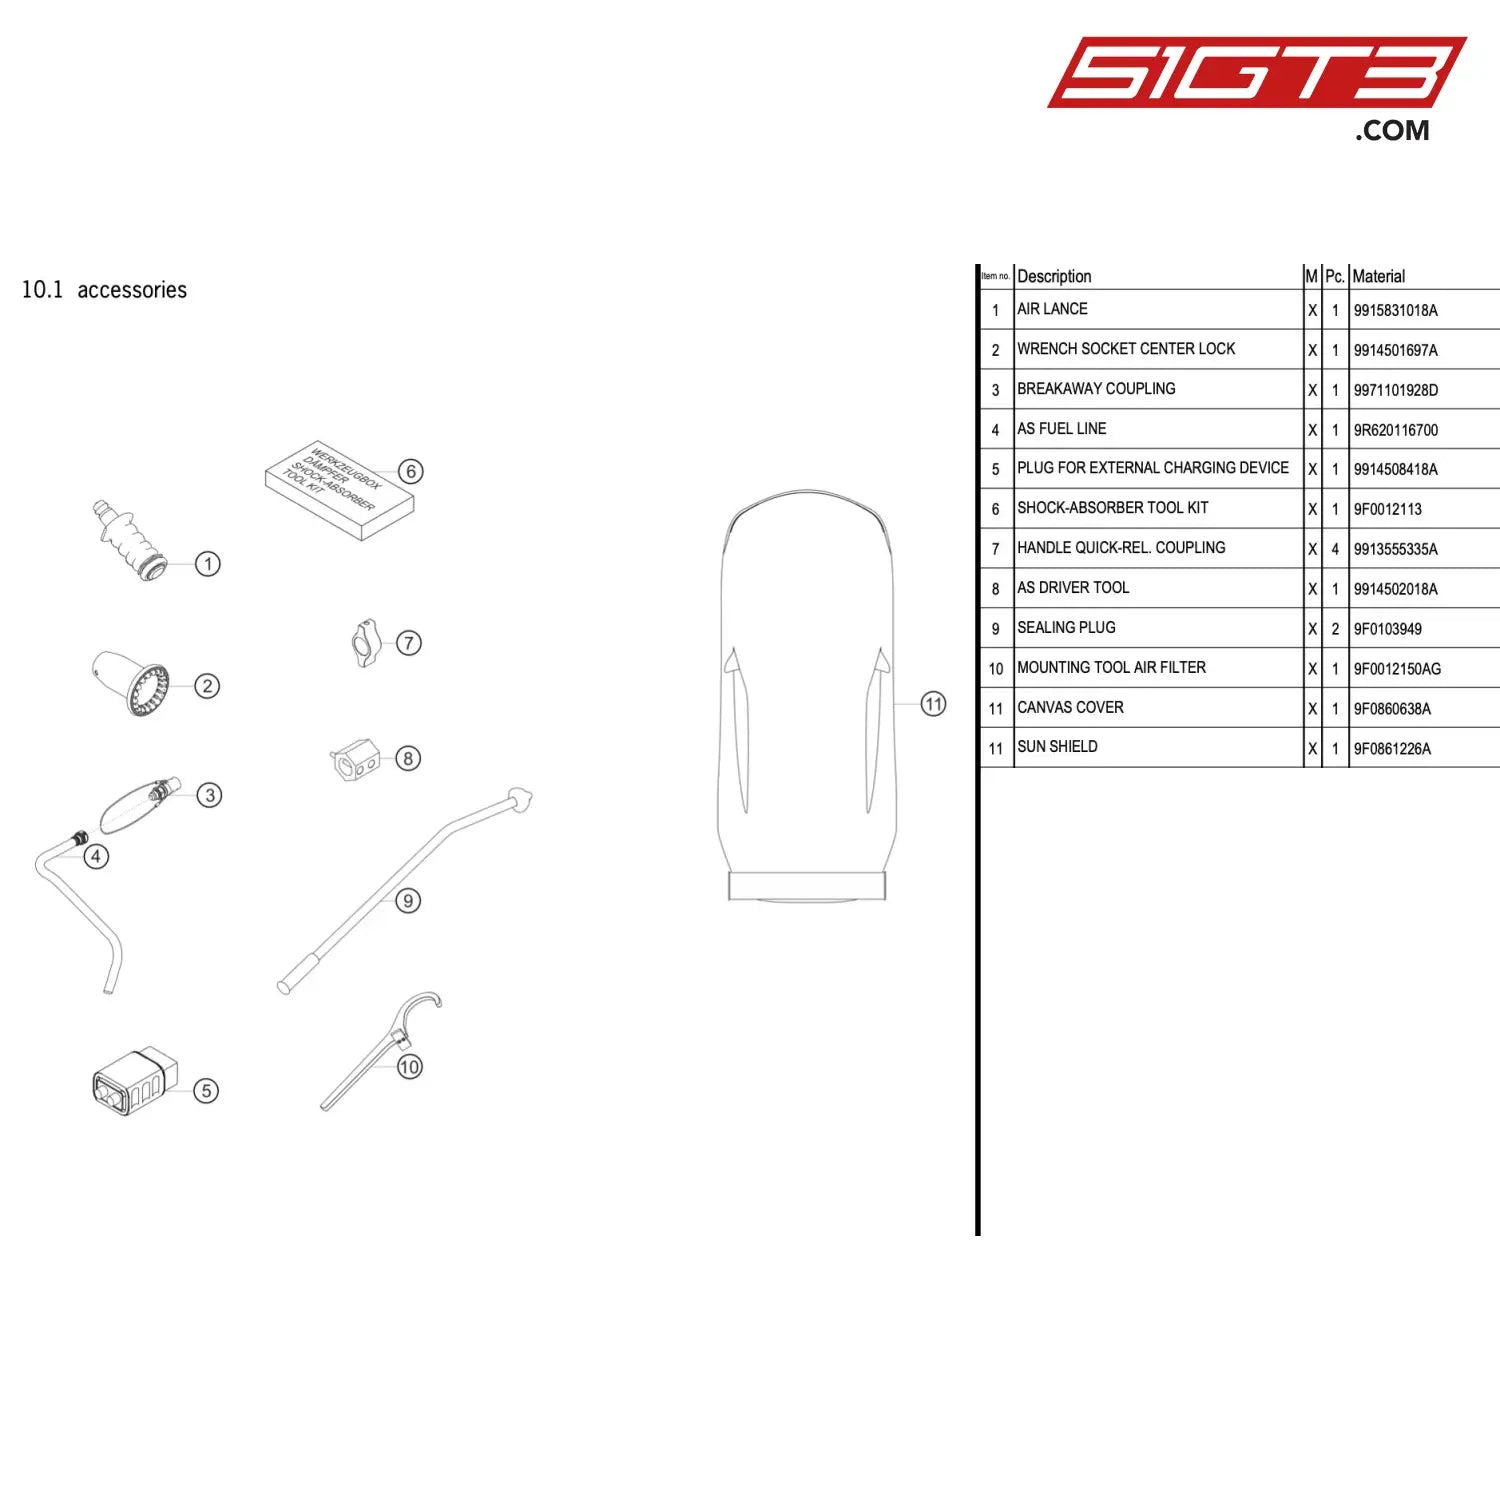 Sun Shield - 9F0861226A [Porsche 911 Gt3 R Type 991 (Gen 2)] Accessories